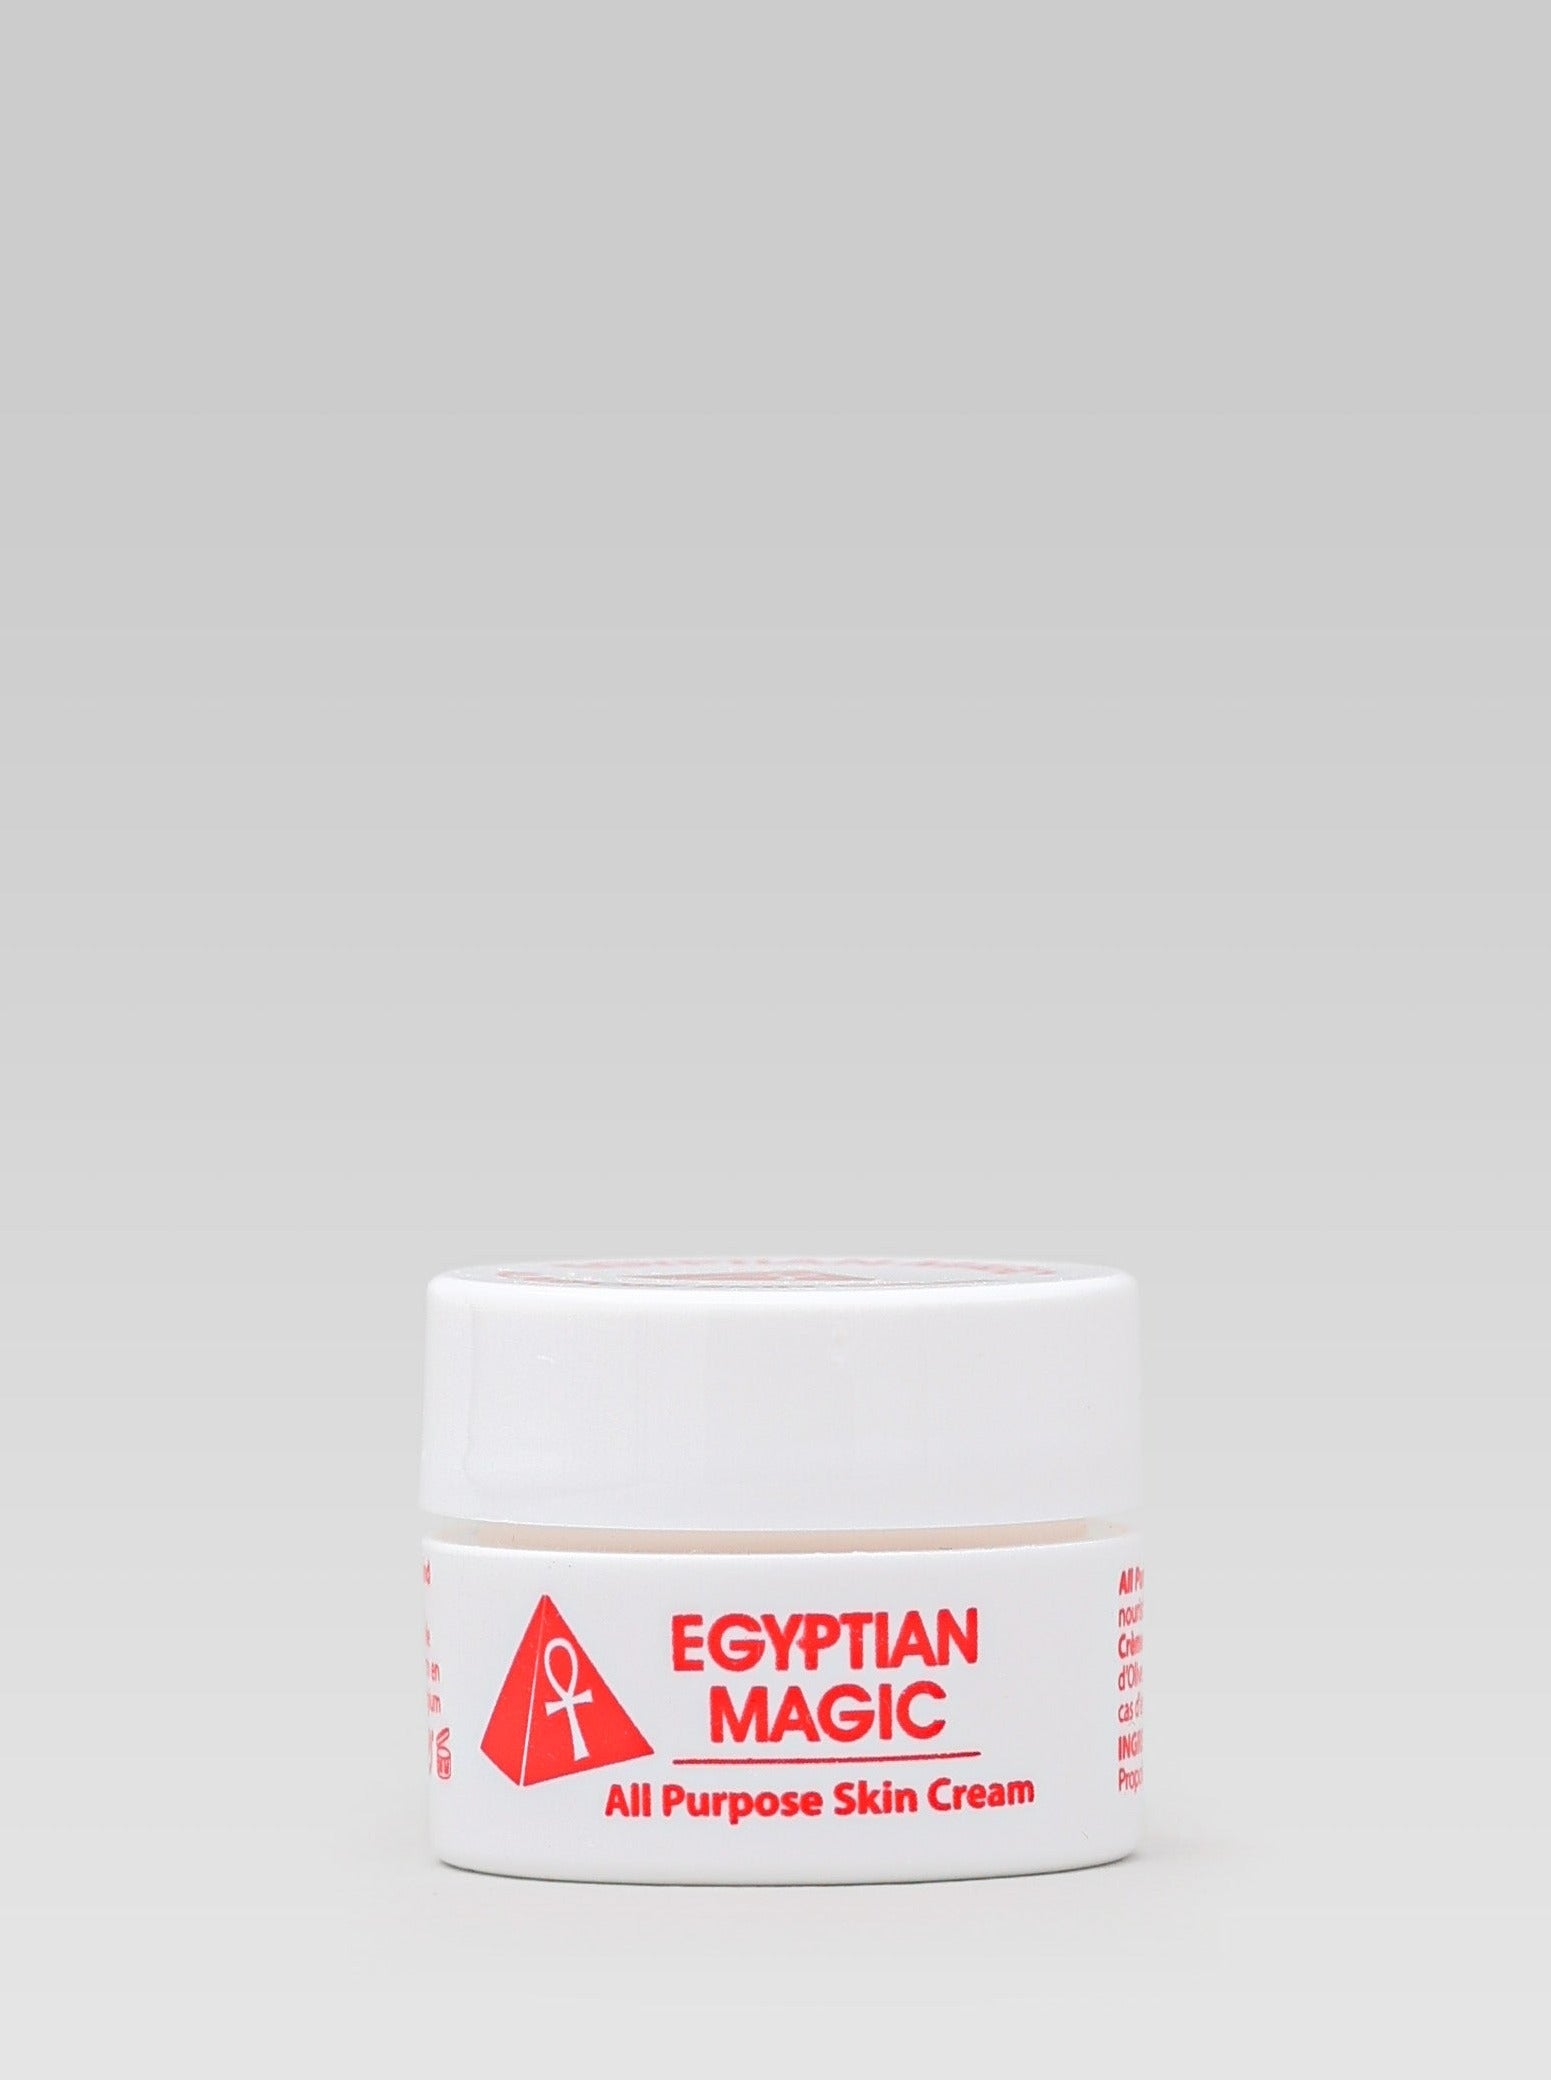 Egyptian Magic All Purpose Skin Cream mini product shot